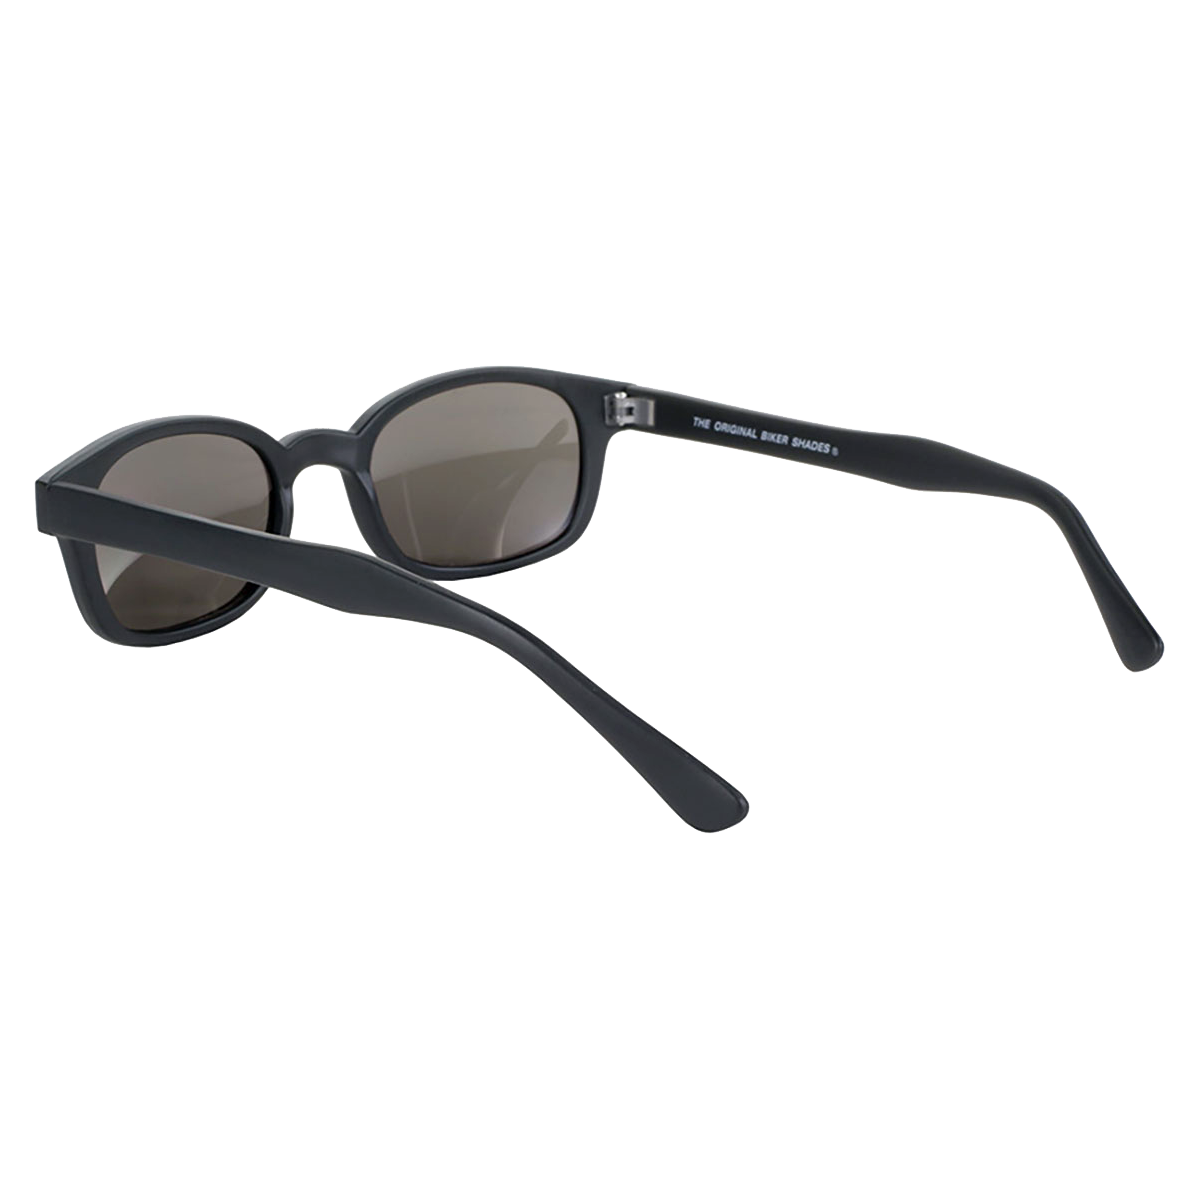 Sunglasses KD's 2000 - Gold mirrored lenses